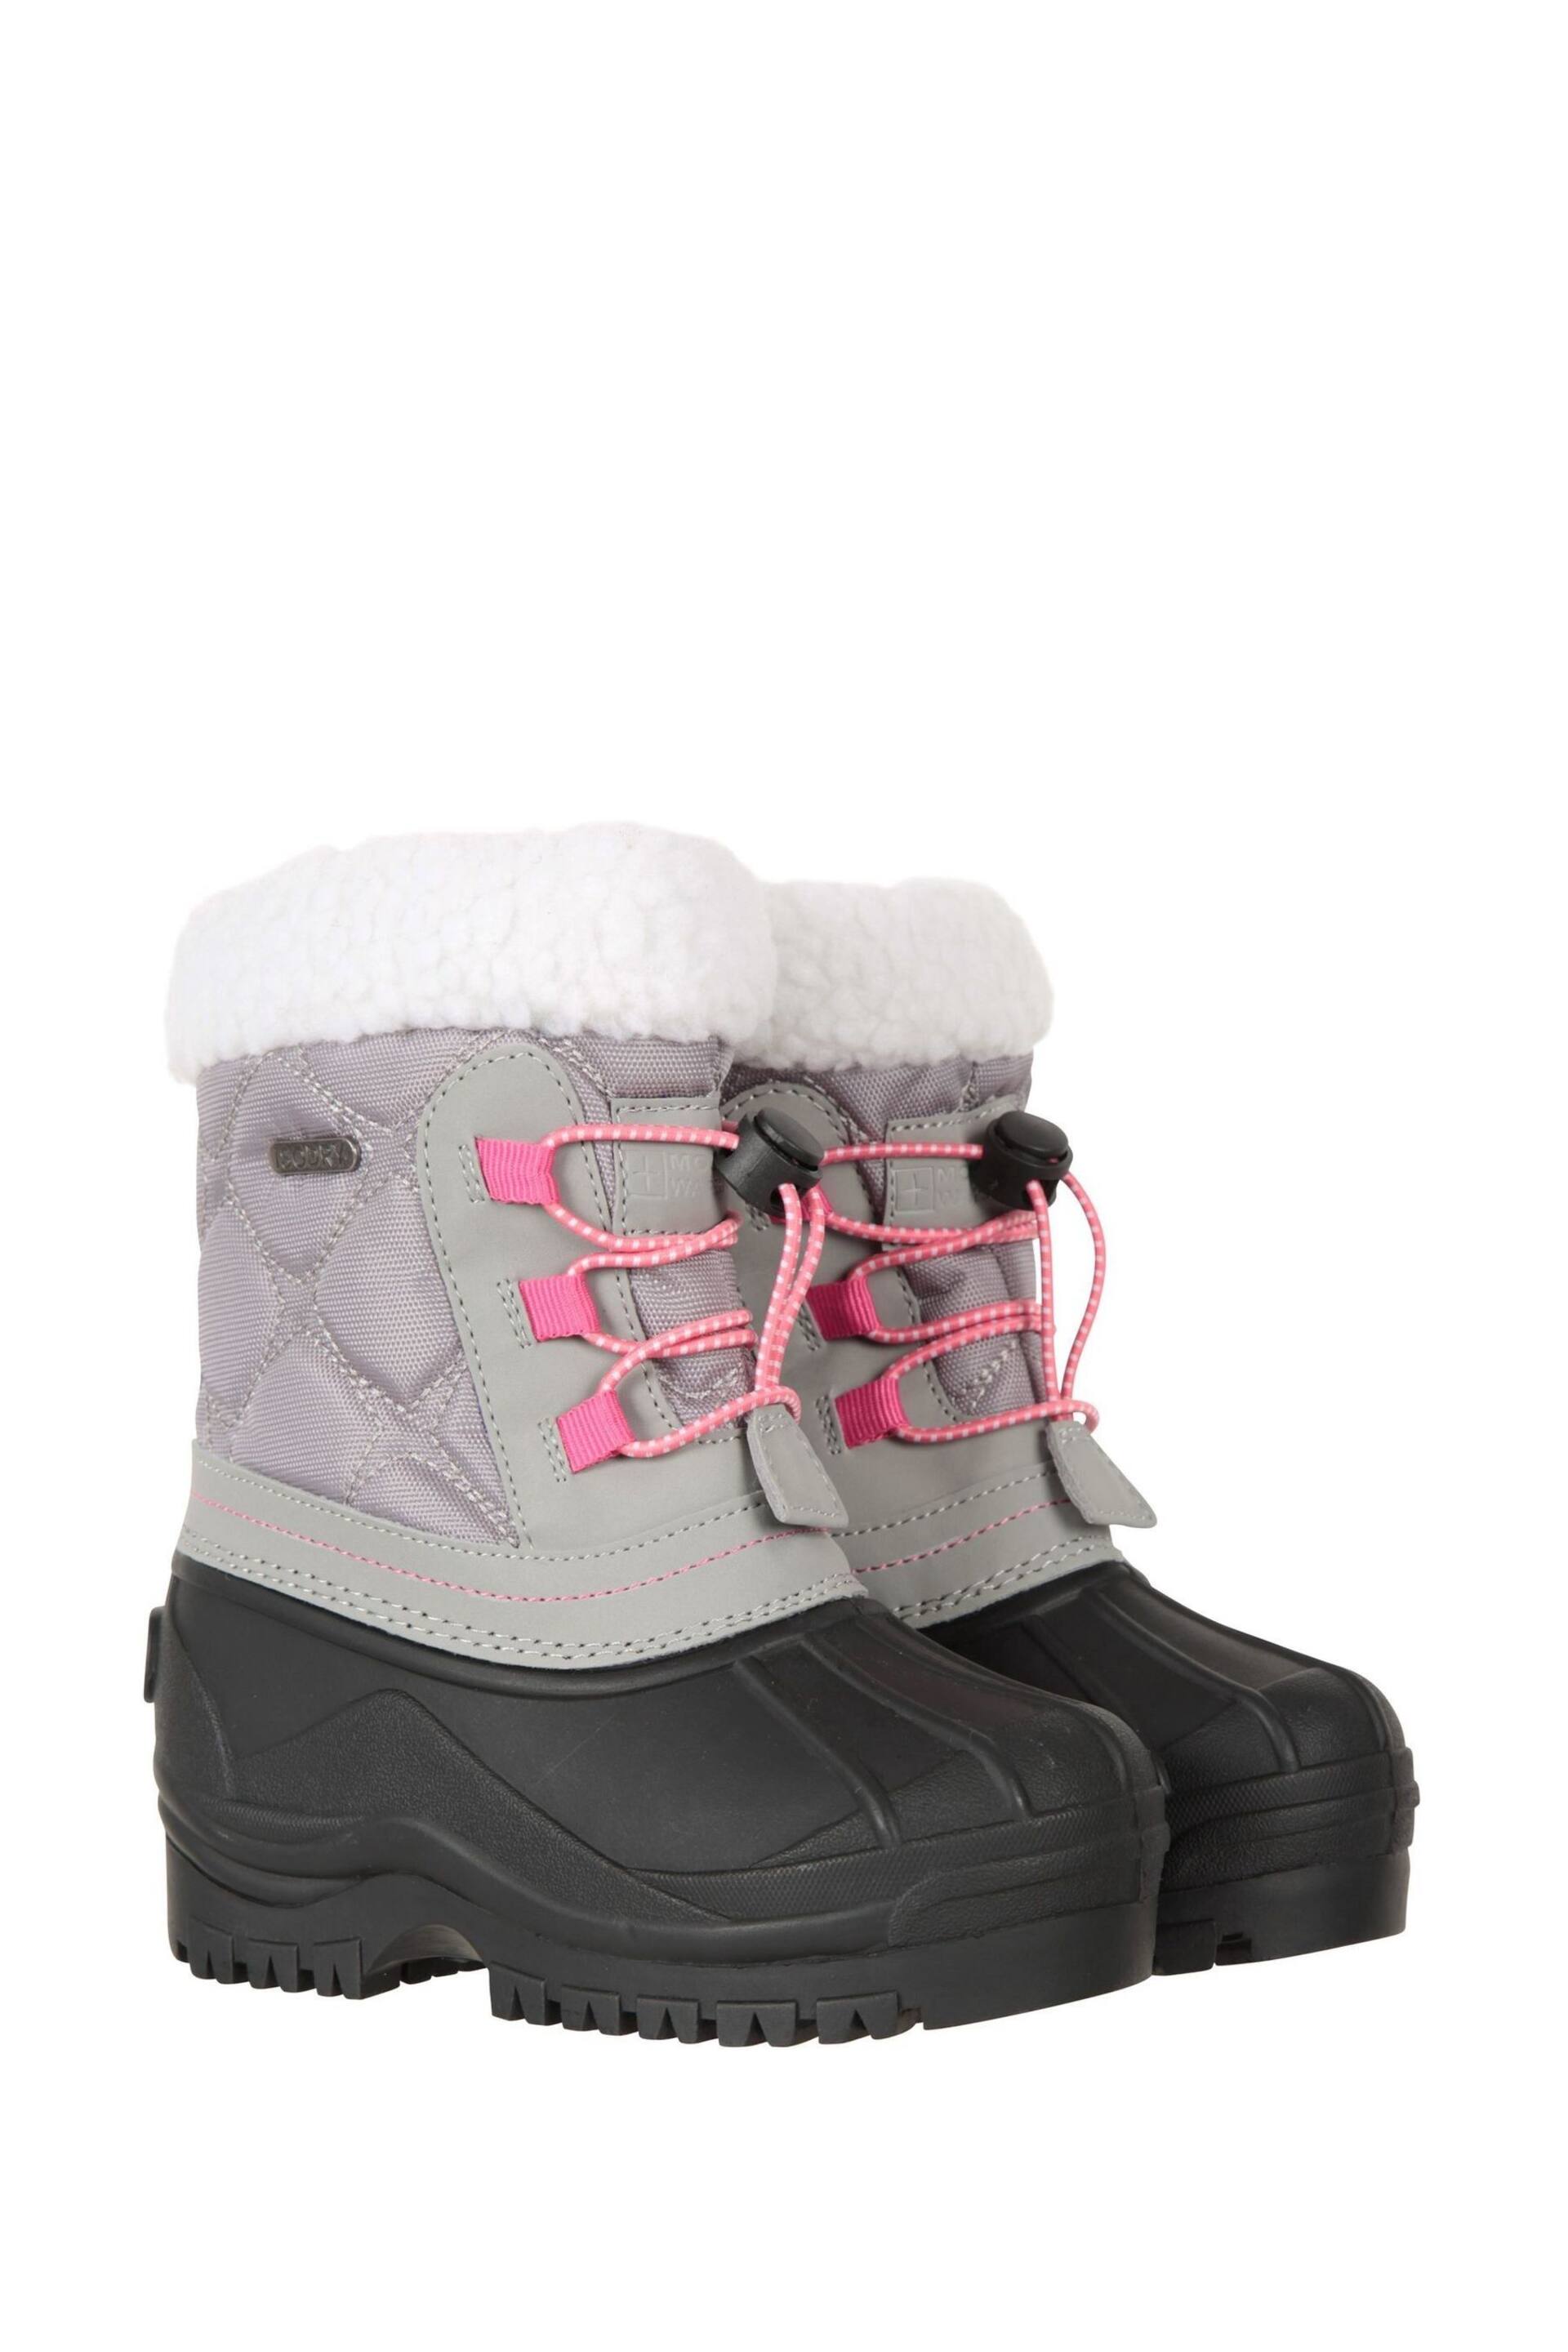 Mountain Warehouse Grey Arctic Junior Waterproof Fleece Lined Snow Boots - Image 1 of 6